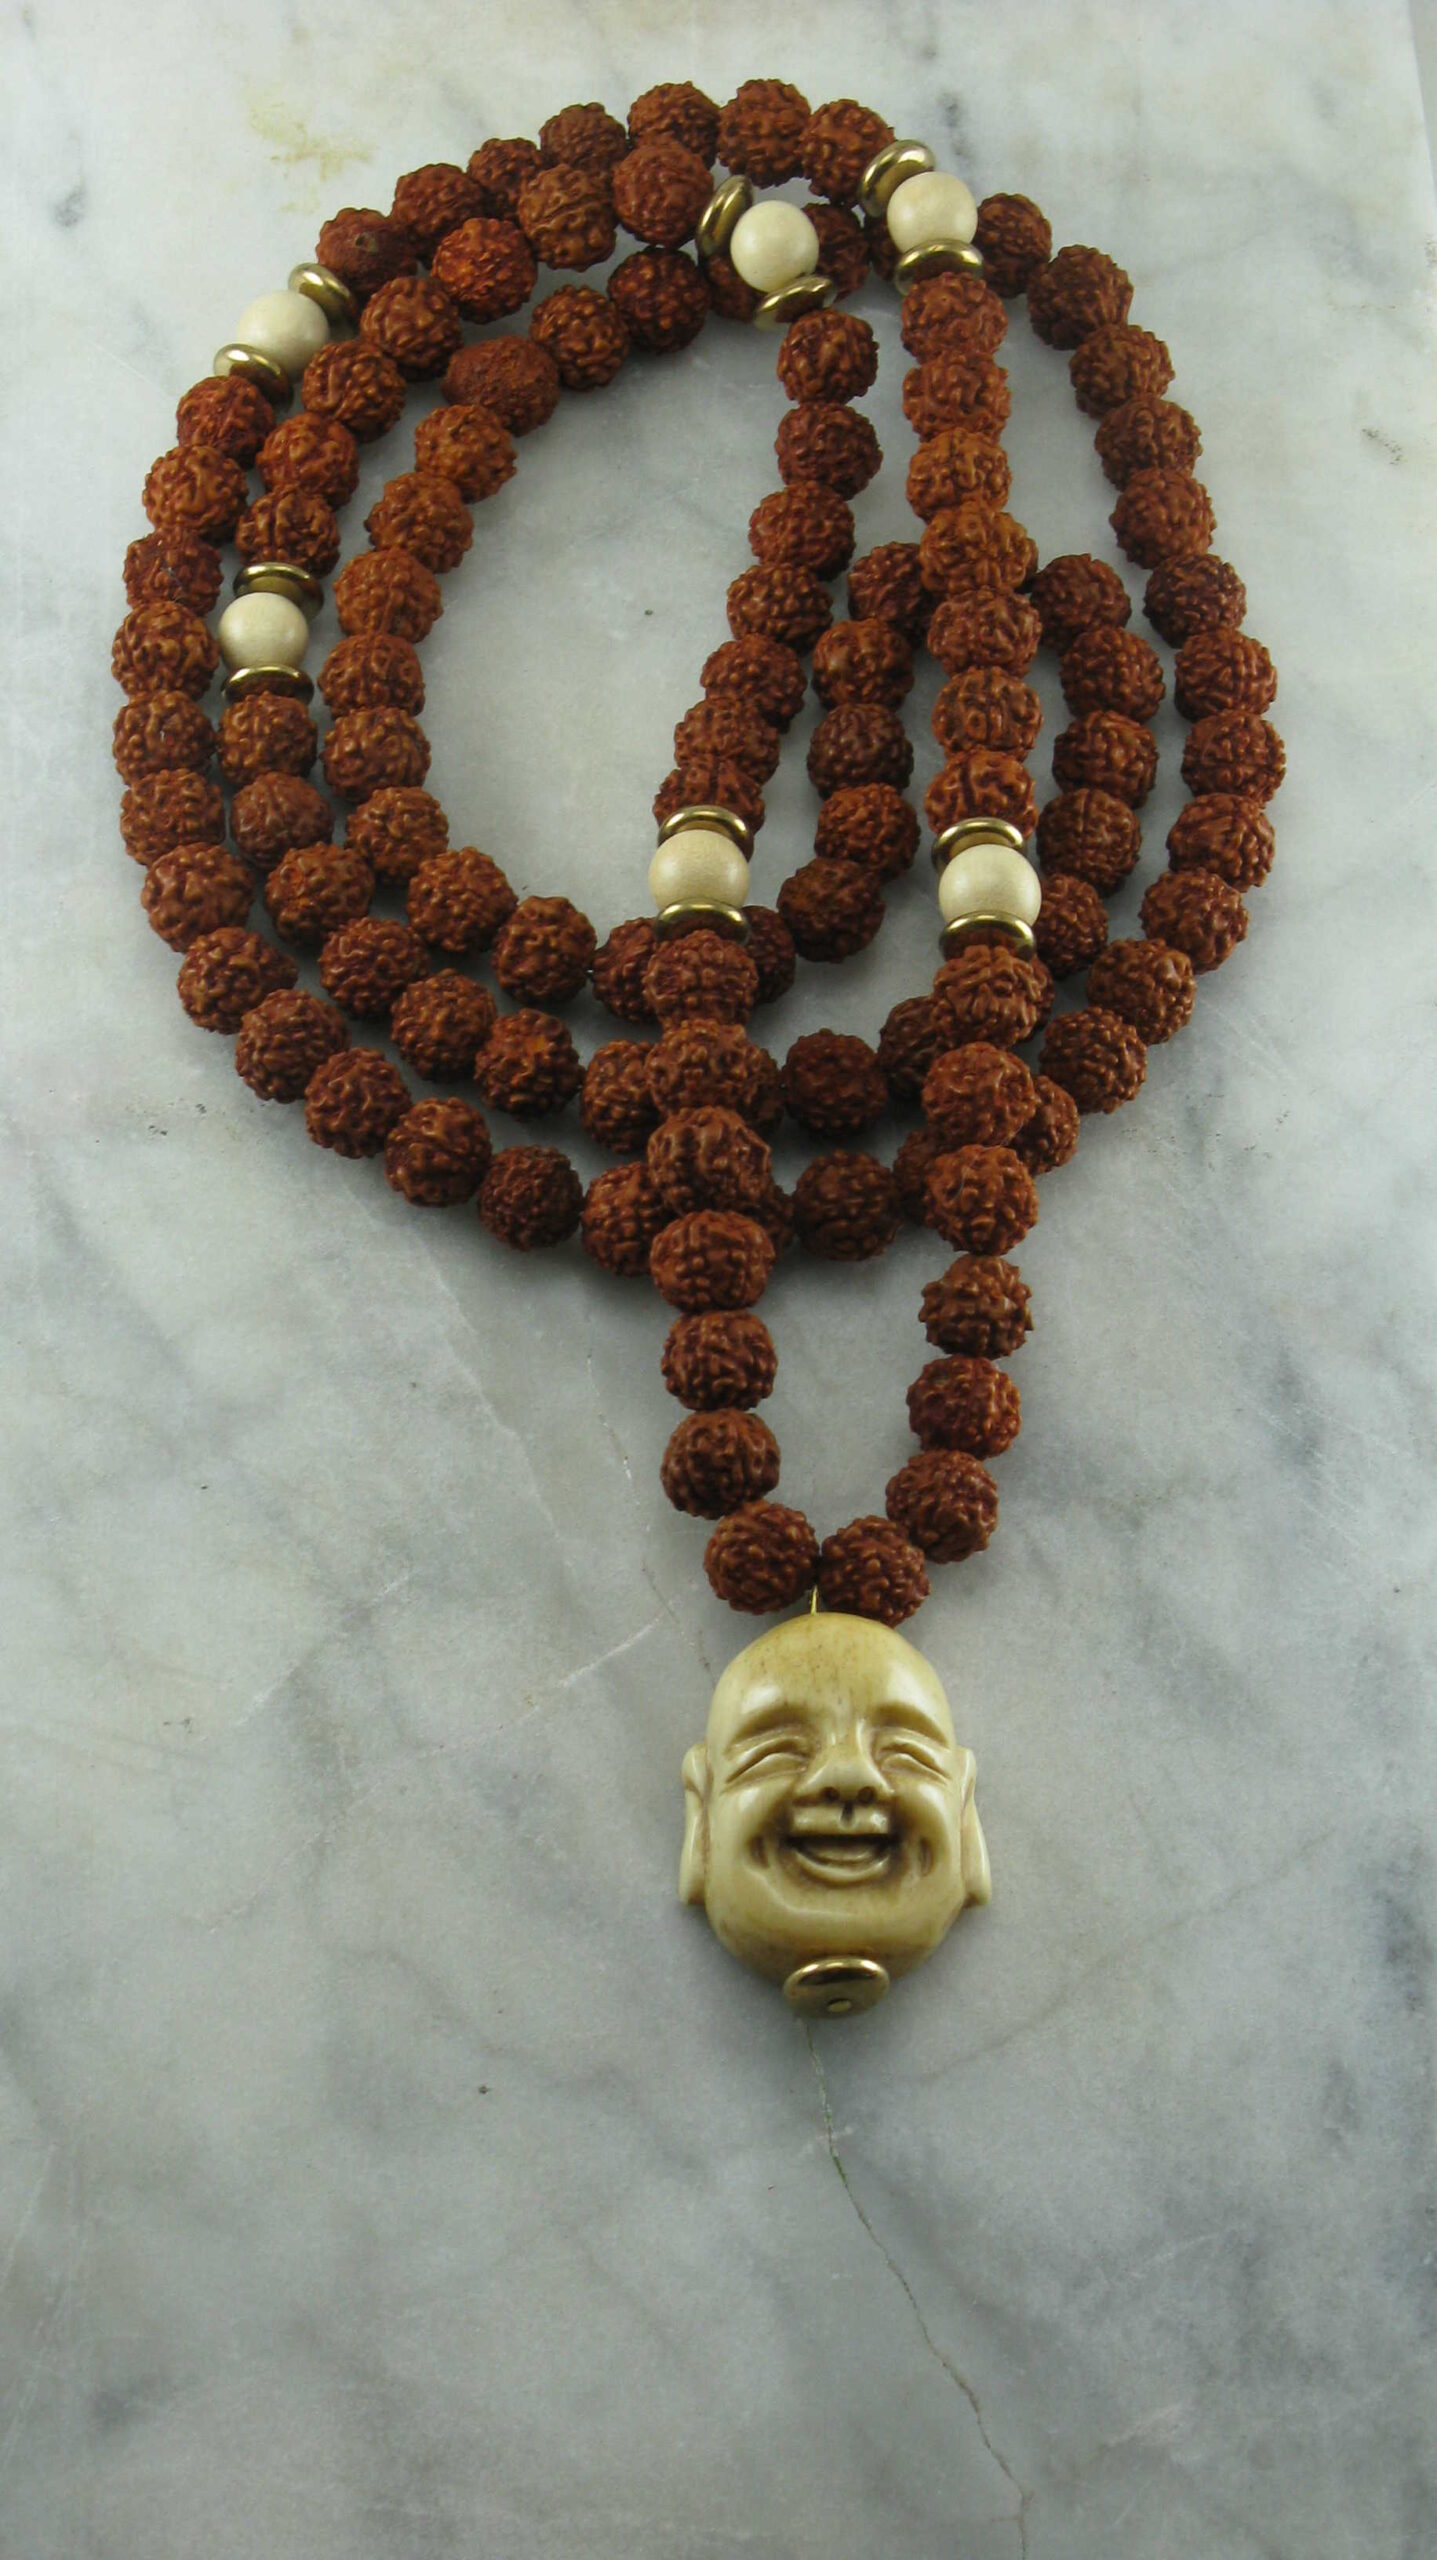 https://saltspringmalas.com/wp-content/uploads/2012/11/Joy_Mala_Necklace_108_Rudraksha_Mala_Beads_Buddhist_Prayer_Beads-scaled.jpg